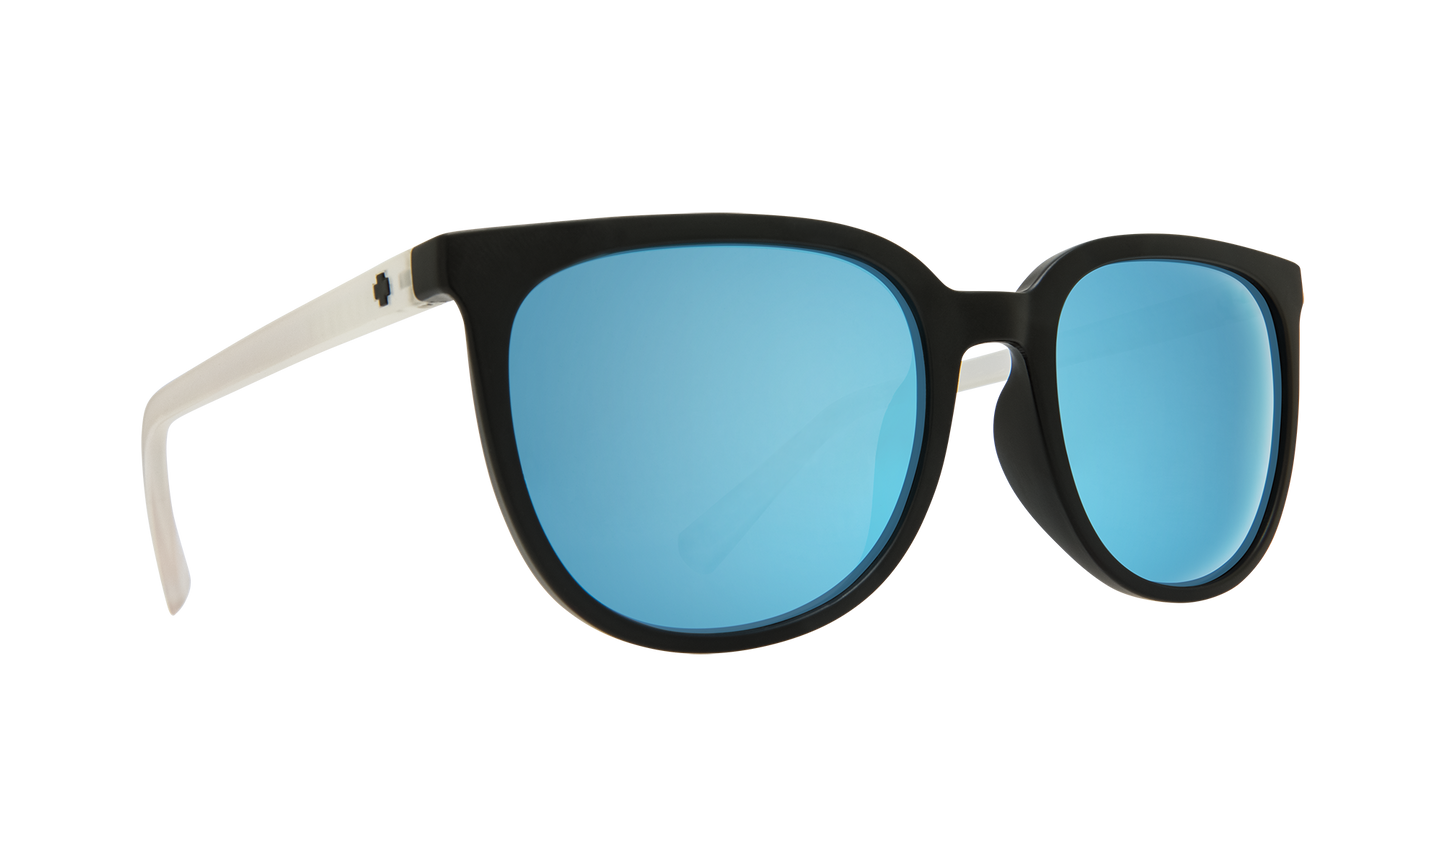 SPY Fizz Sunglasses  Gray w/ Light Blue Spectra Matte Black/Matte Crystal  53-21-145